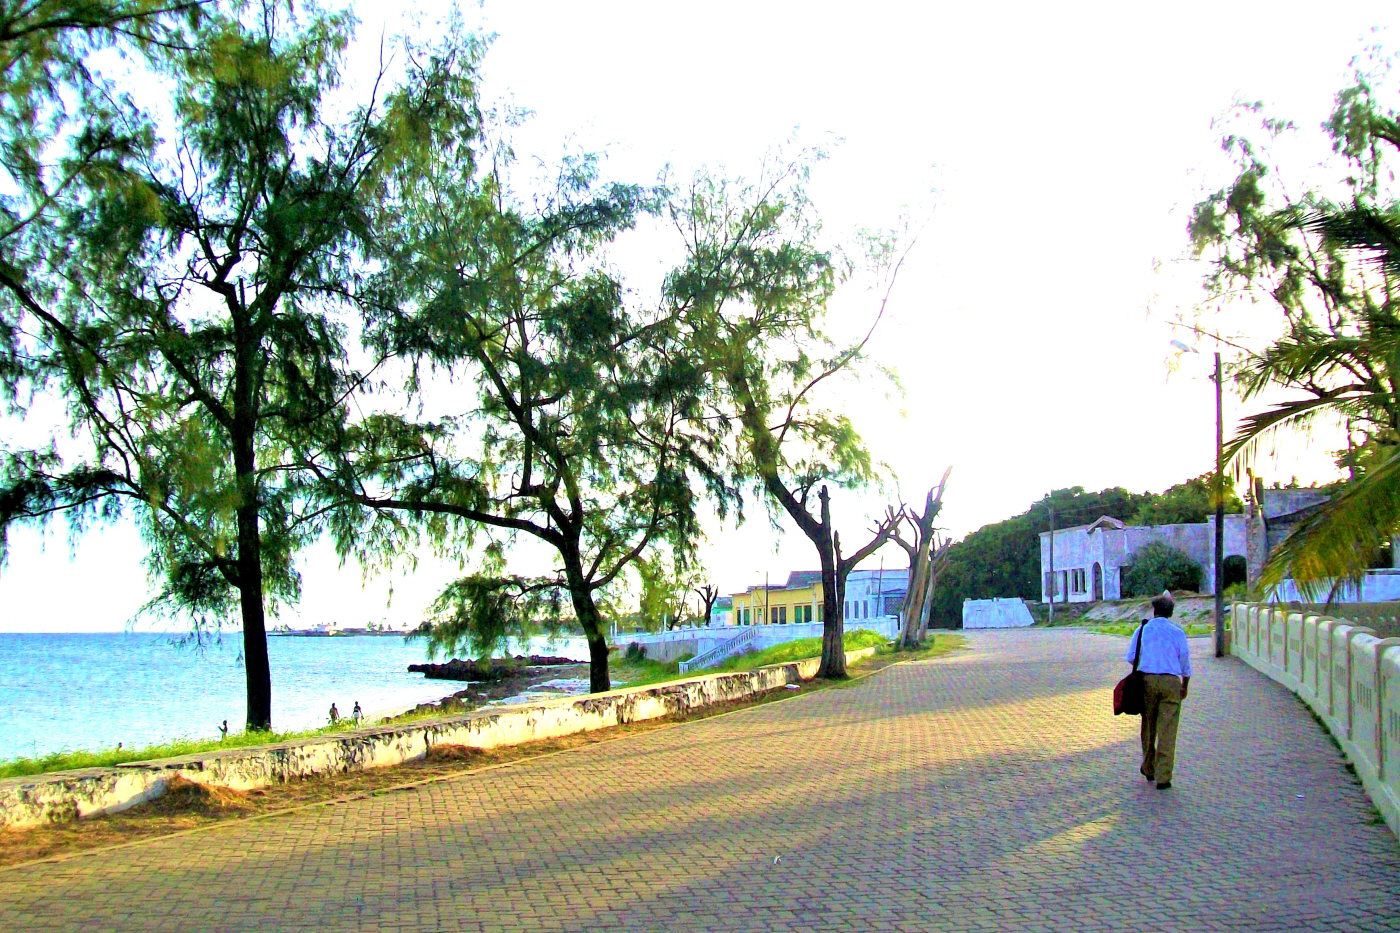 Ajata in Coastal Road - Mozambique Island - UNESCO World Heritage Site